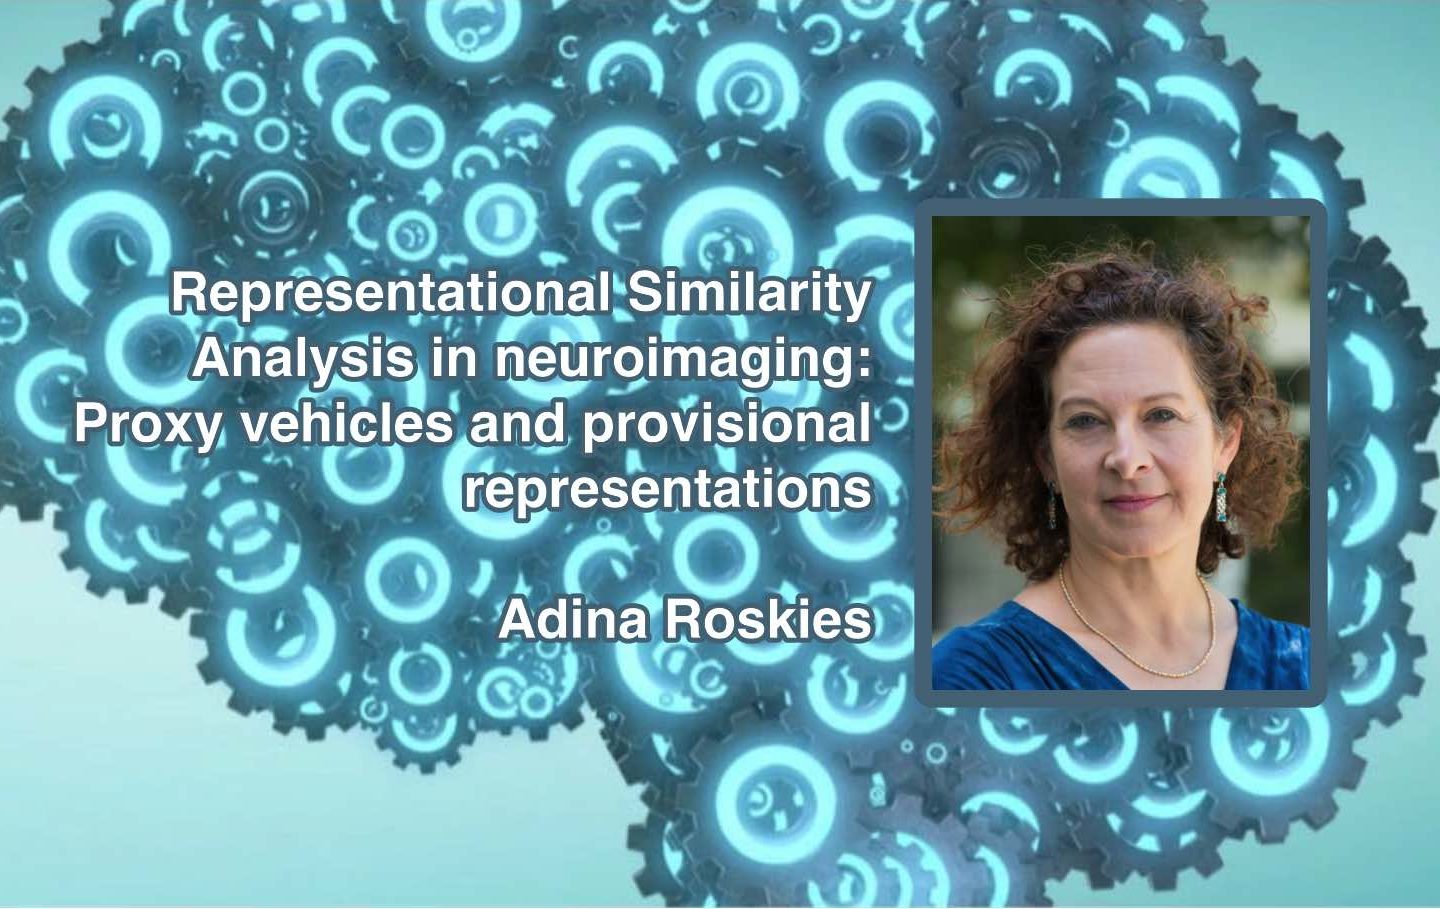 Adina Roskies will live-stream “Representational Similarity Analysis in neuroimaging…” this Friday